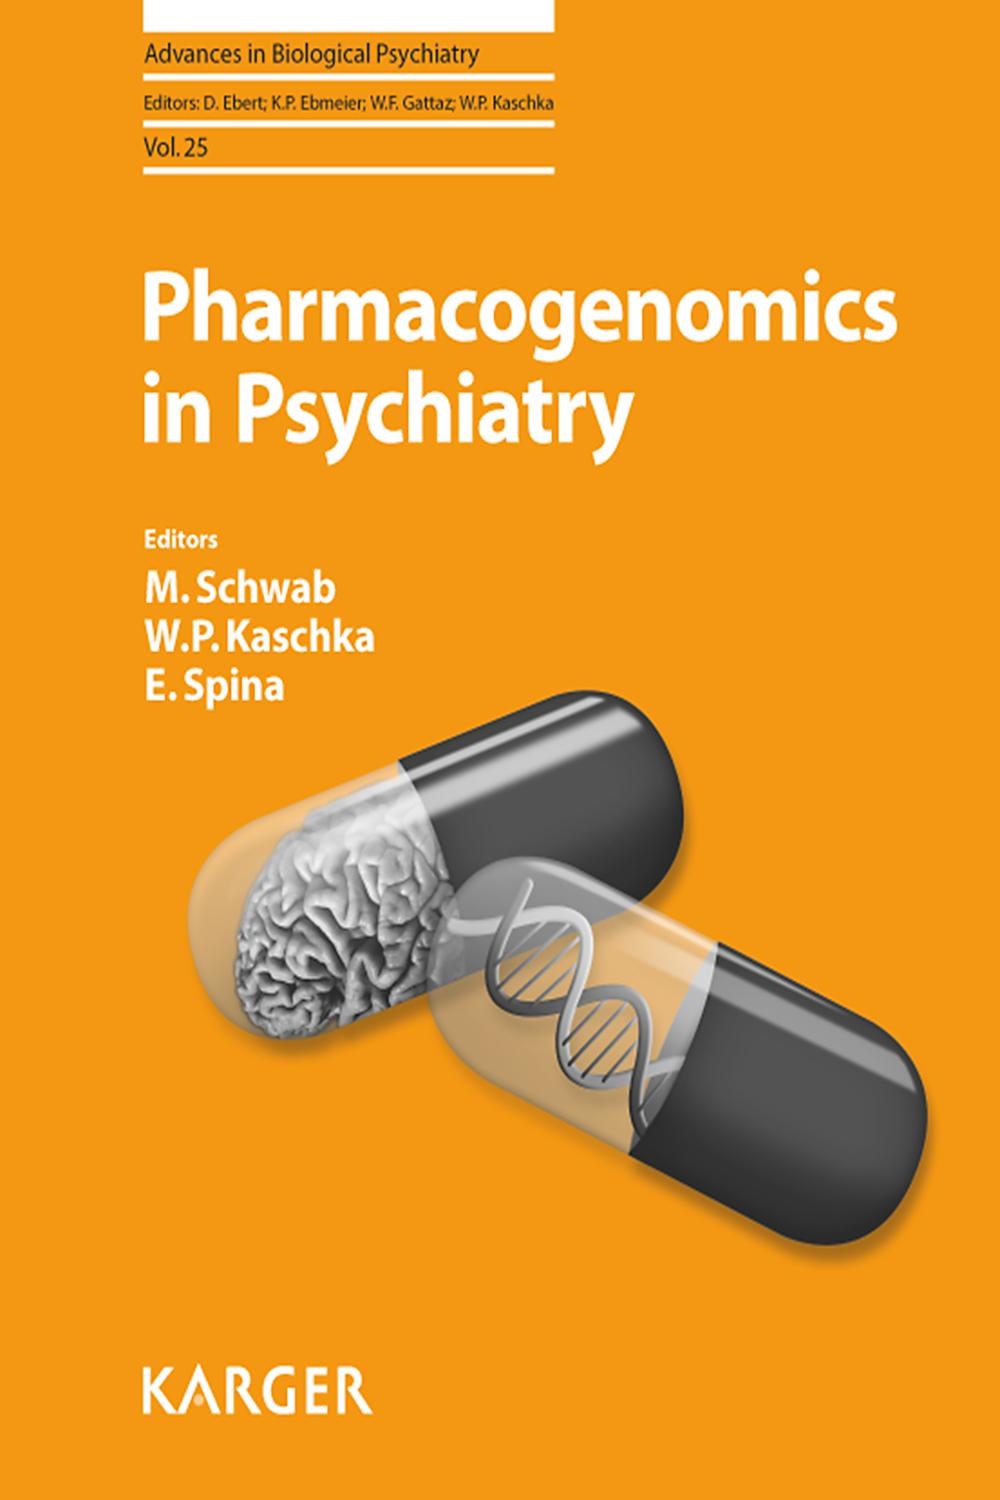 Pharmacogenomics in Psychiatry - M. Schwab, W. P. Kaschka, E. Spina